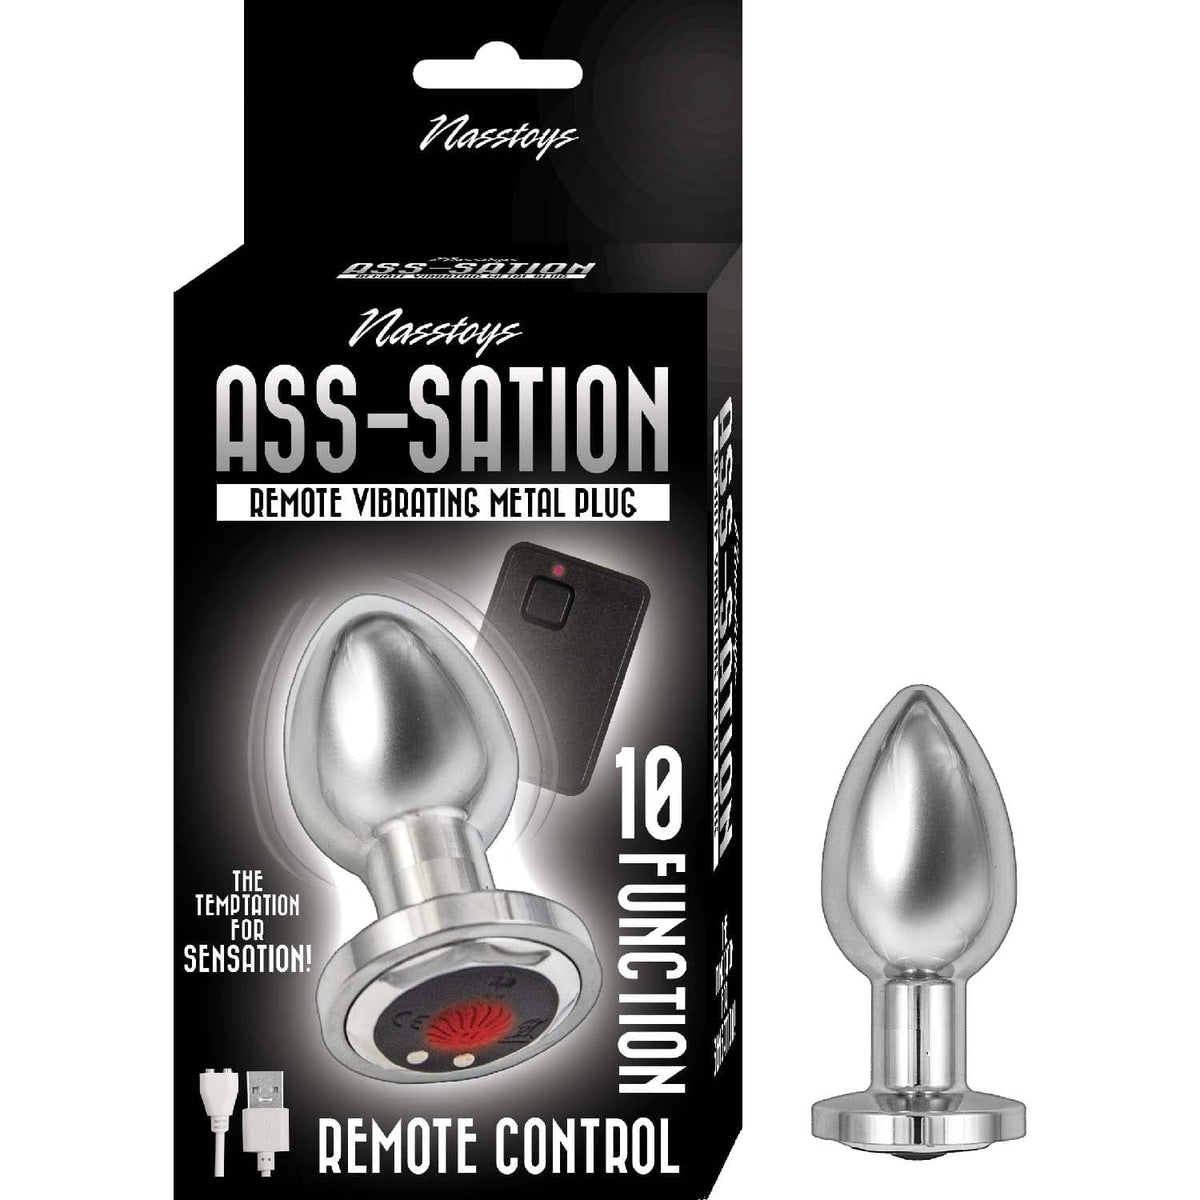 Ass-Sation Remote Vibrating Metal Anal Plug